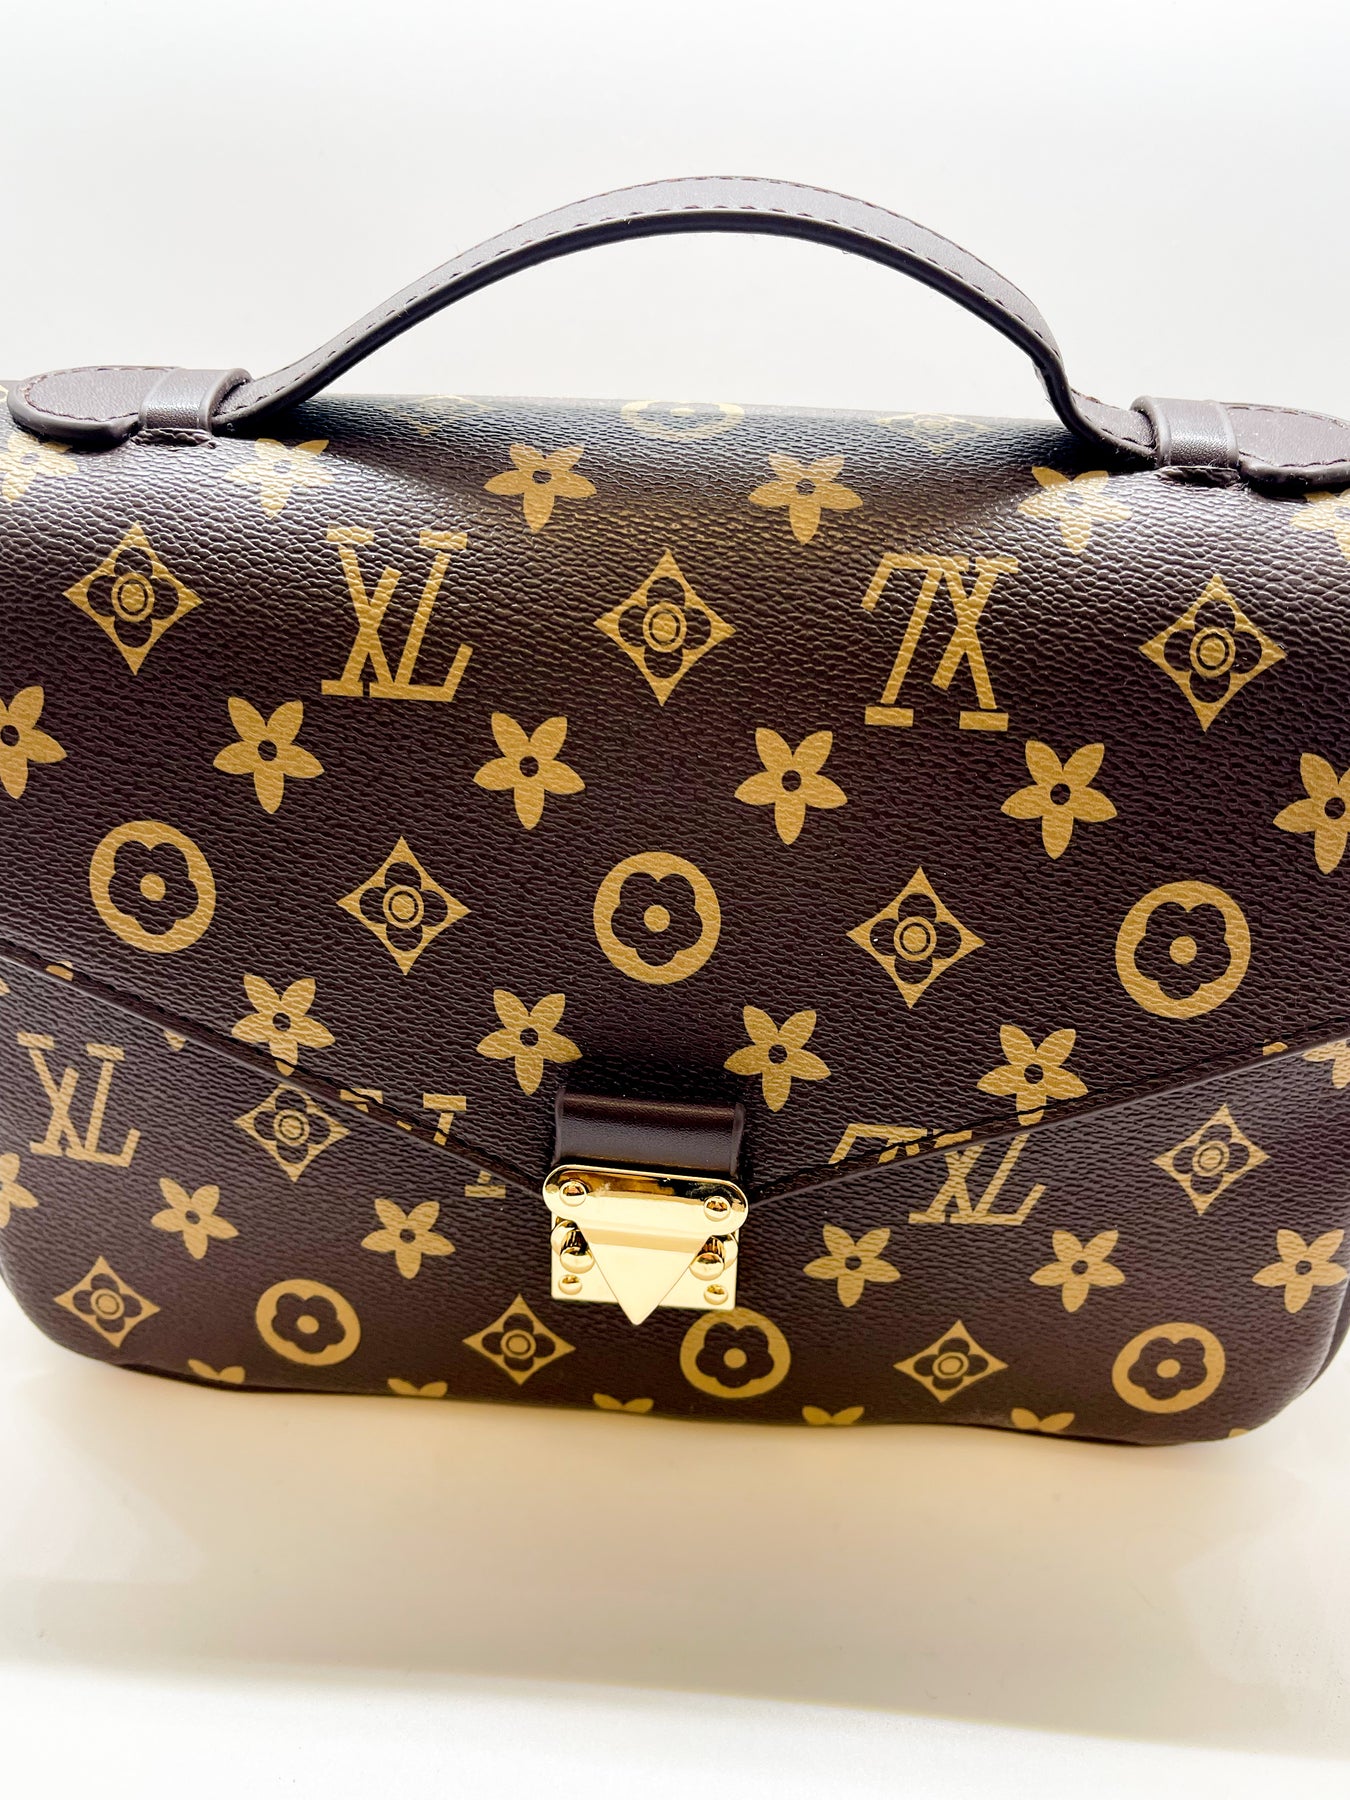 Louis Vuitton Designer Inspired Handbags